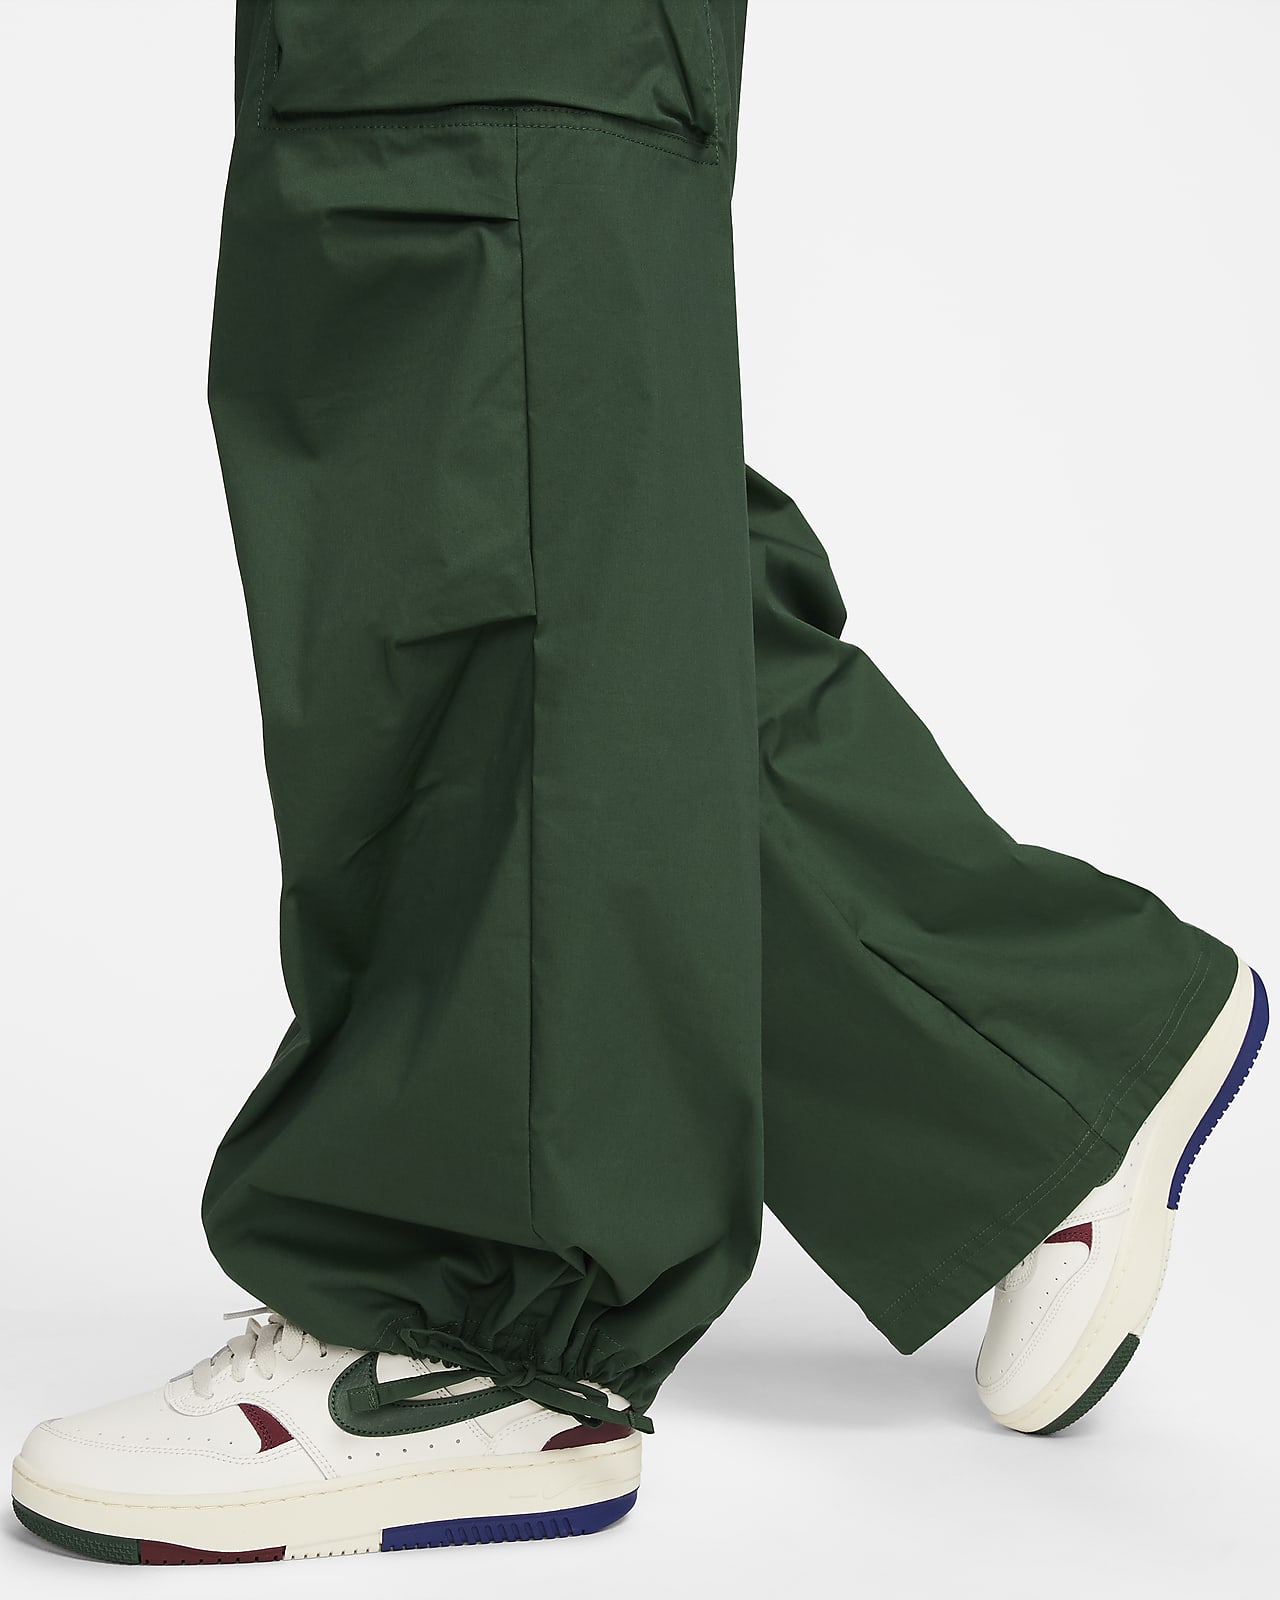 Parachute Pants Nike -  Denmark